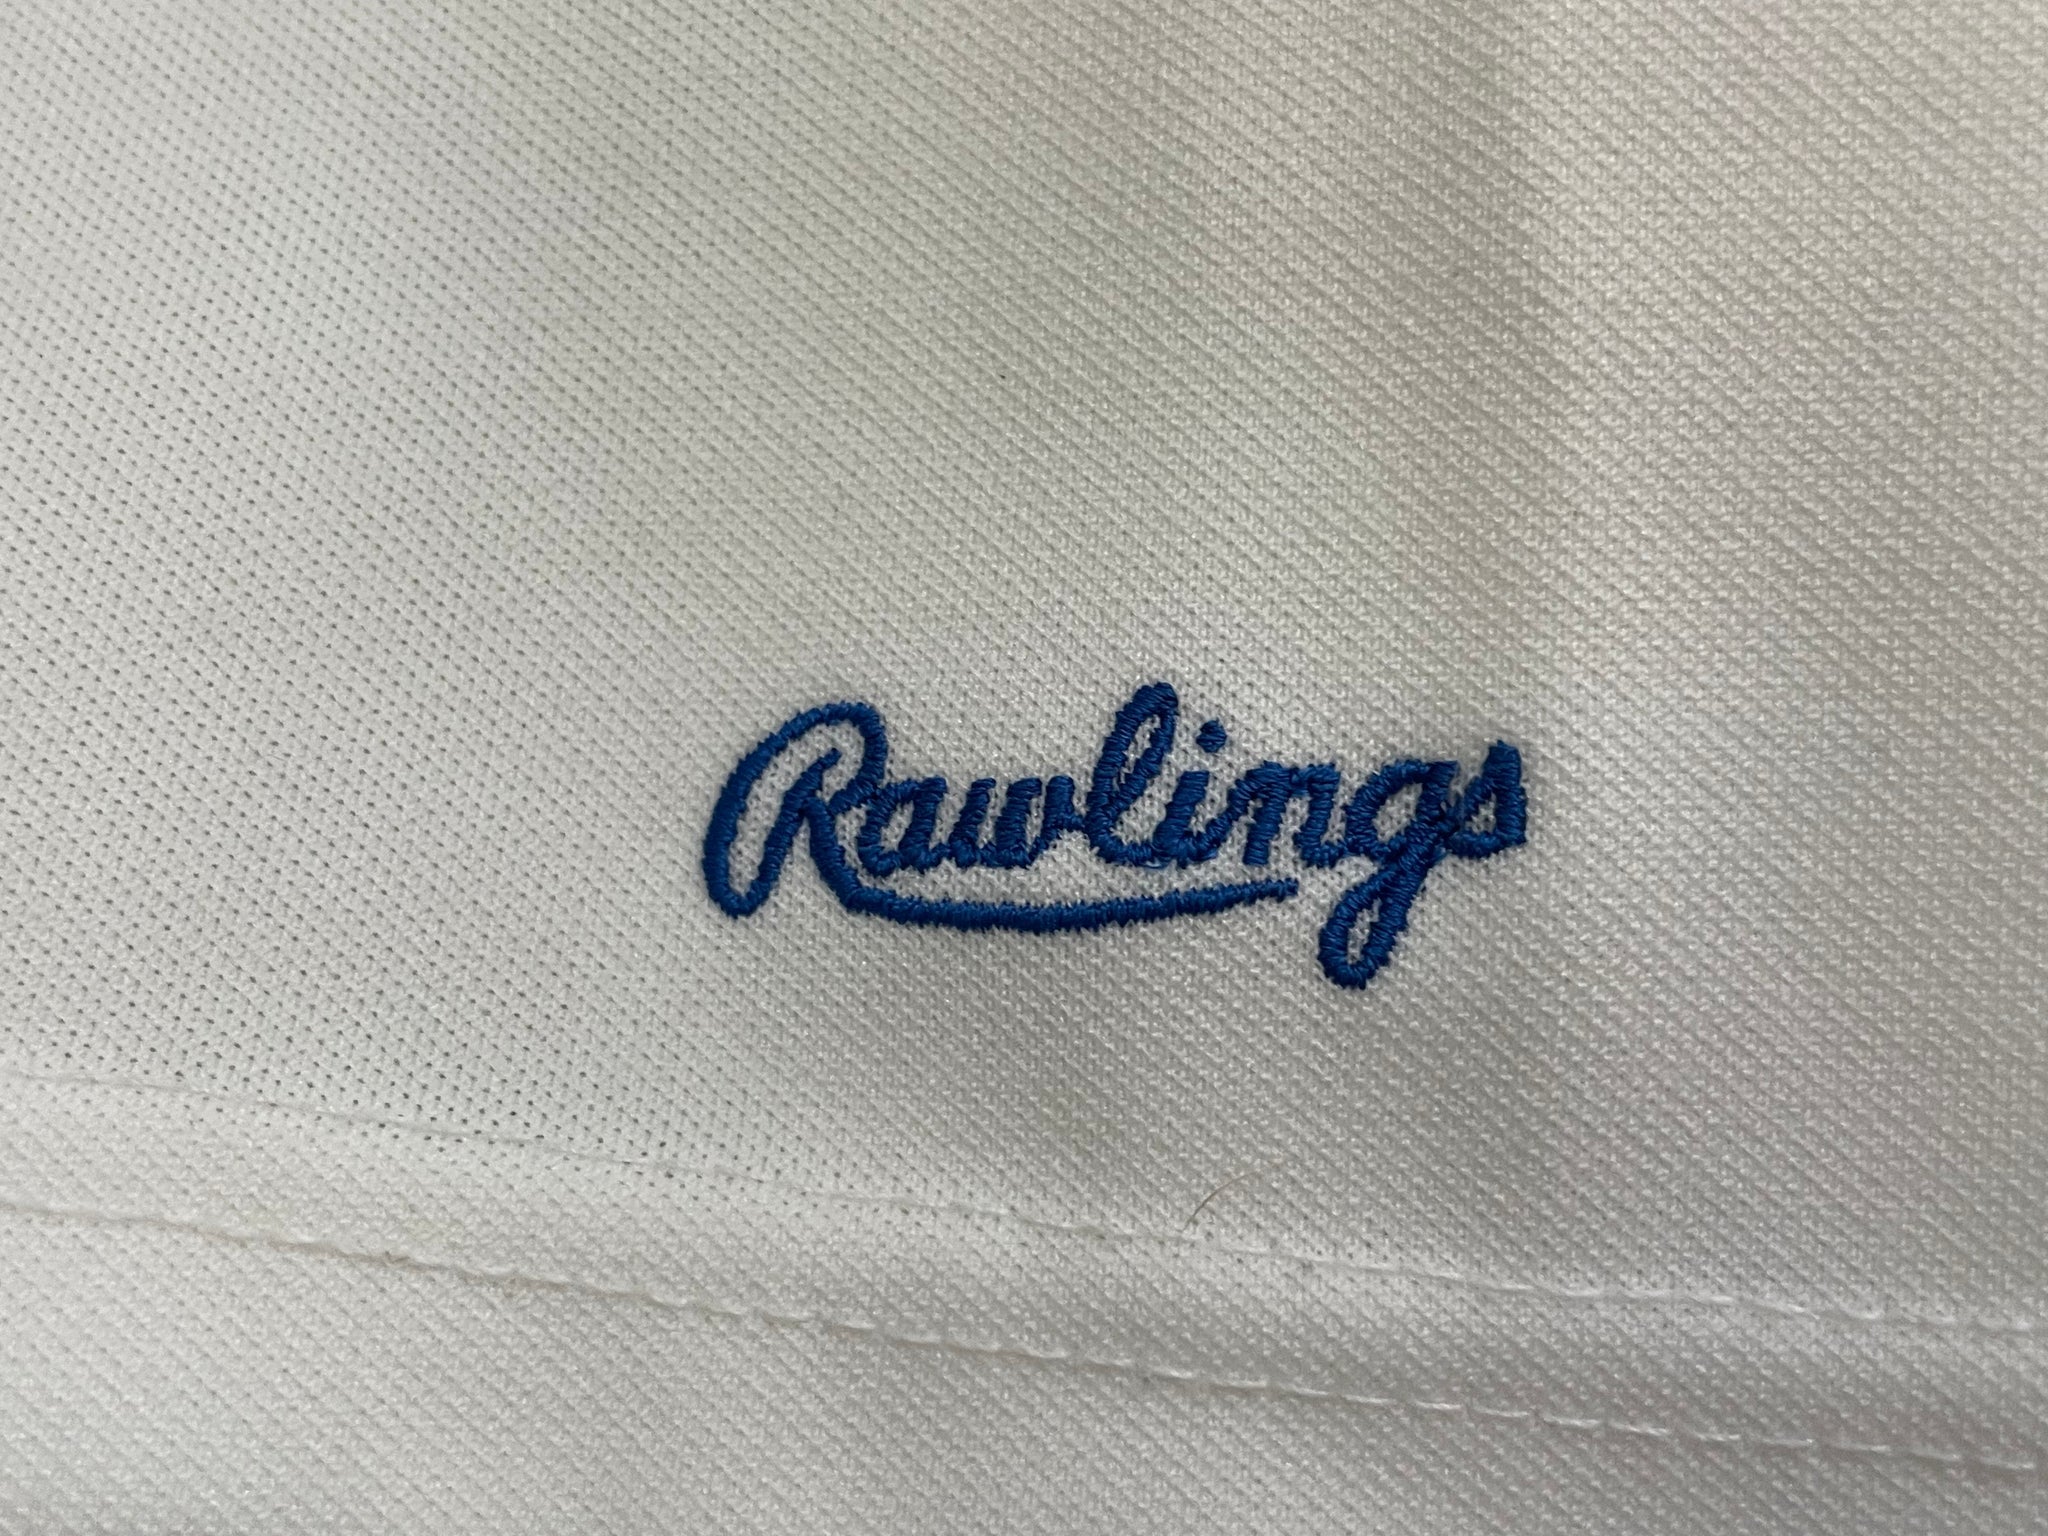 rawlings dodgers jersey